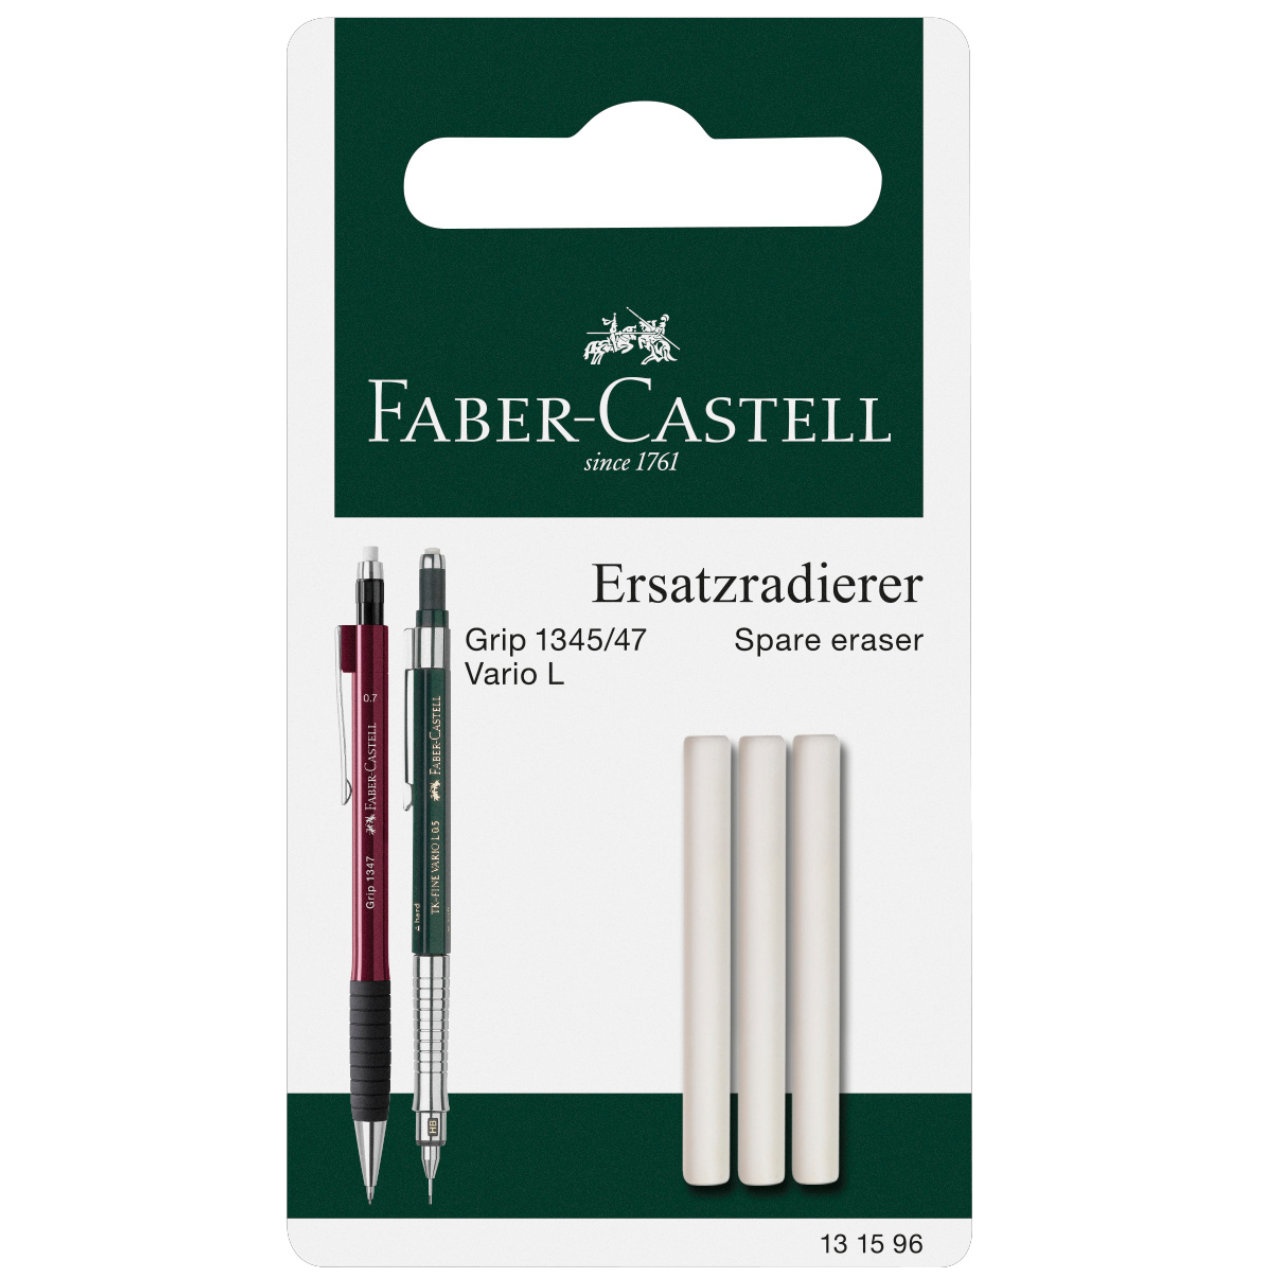 Spare eraser, pack of 3, Faber-Castell 131596 - buy now on  architekturbedarf.de